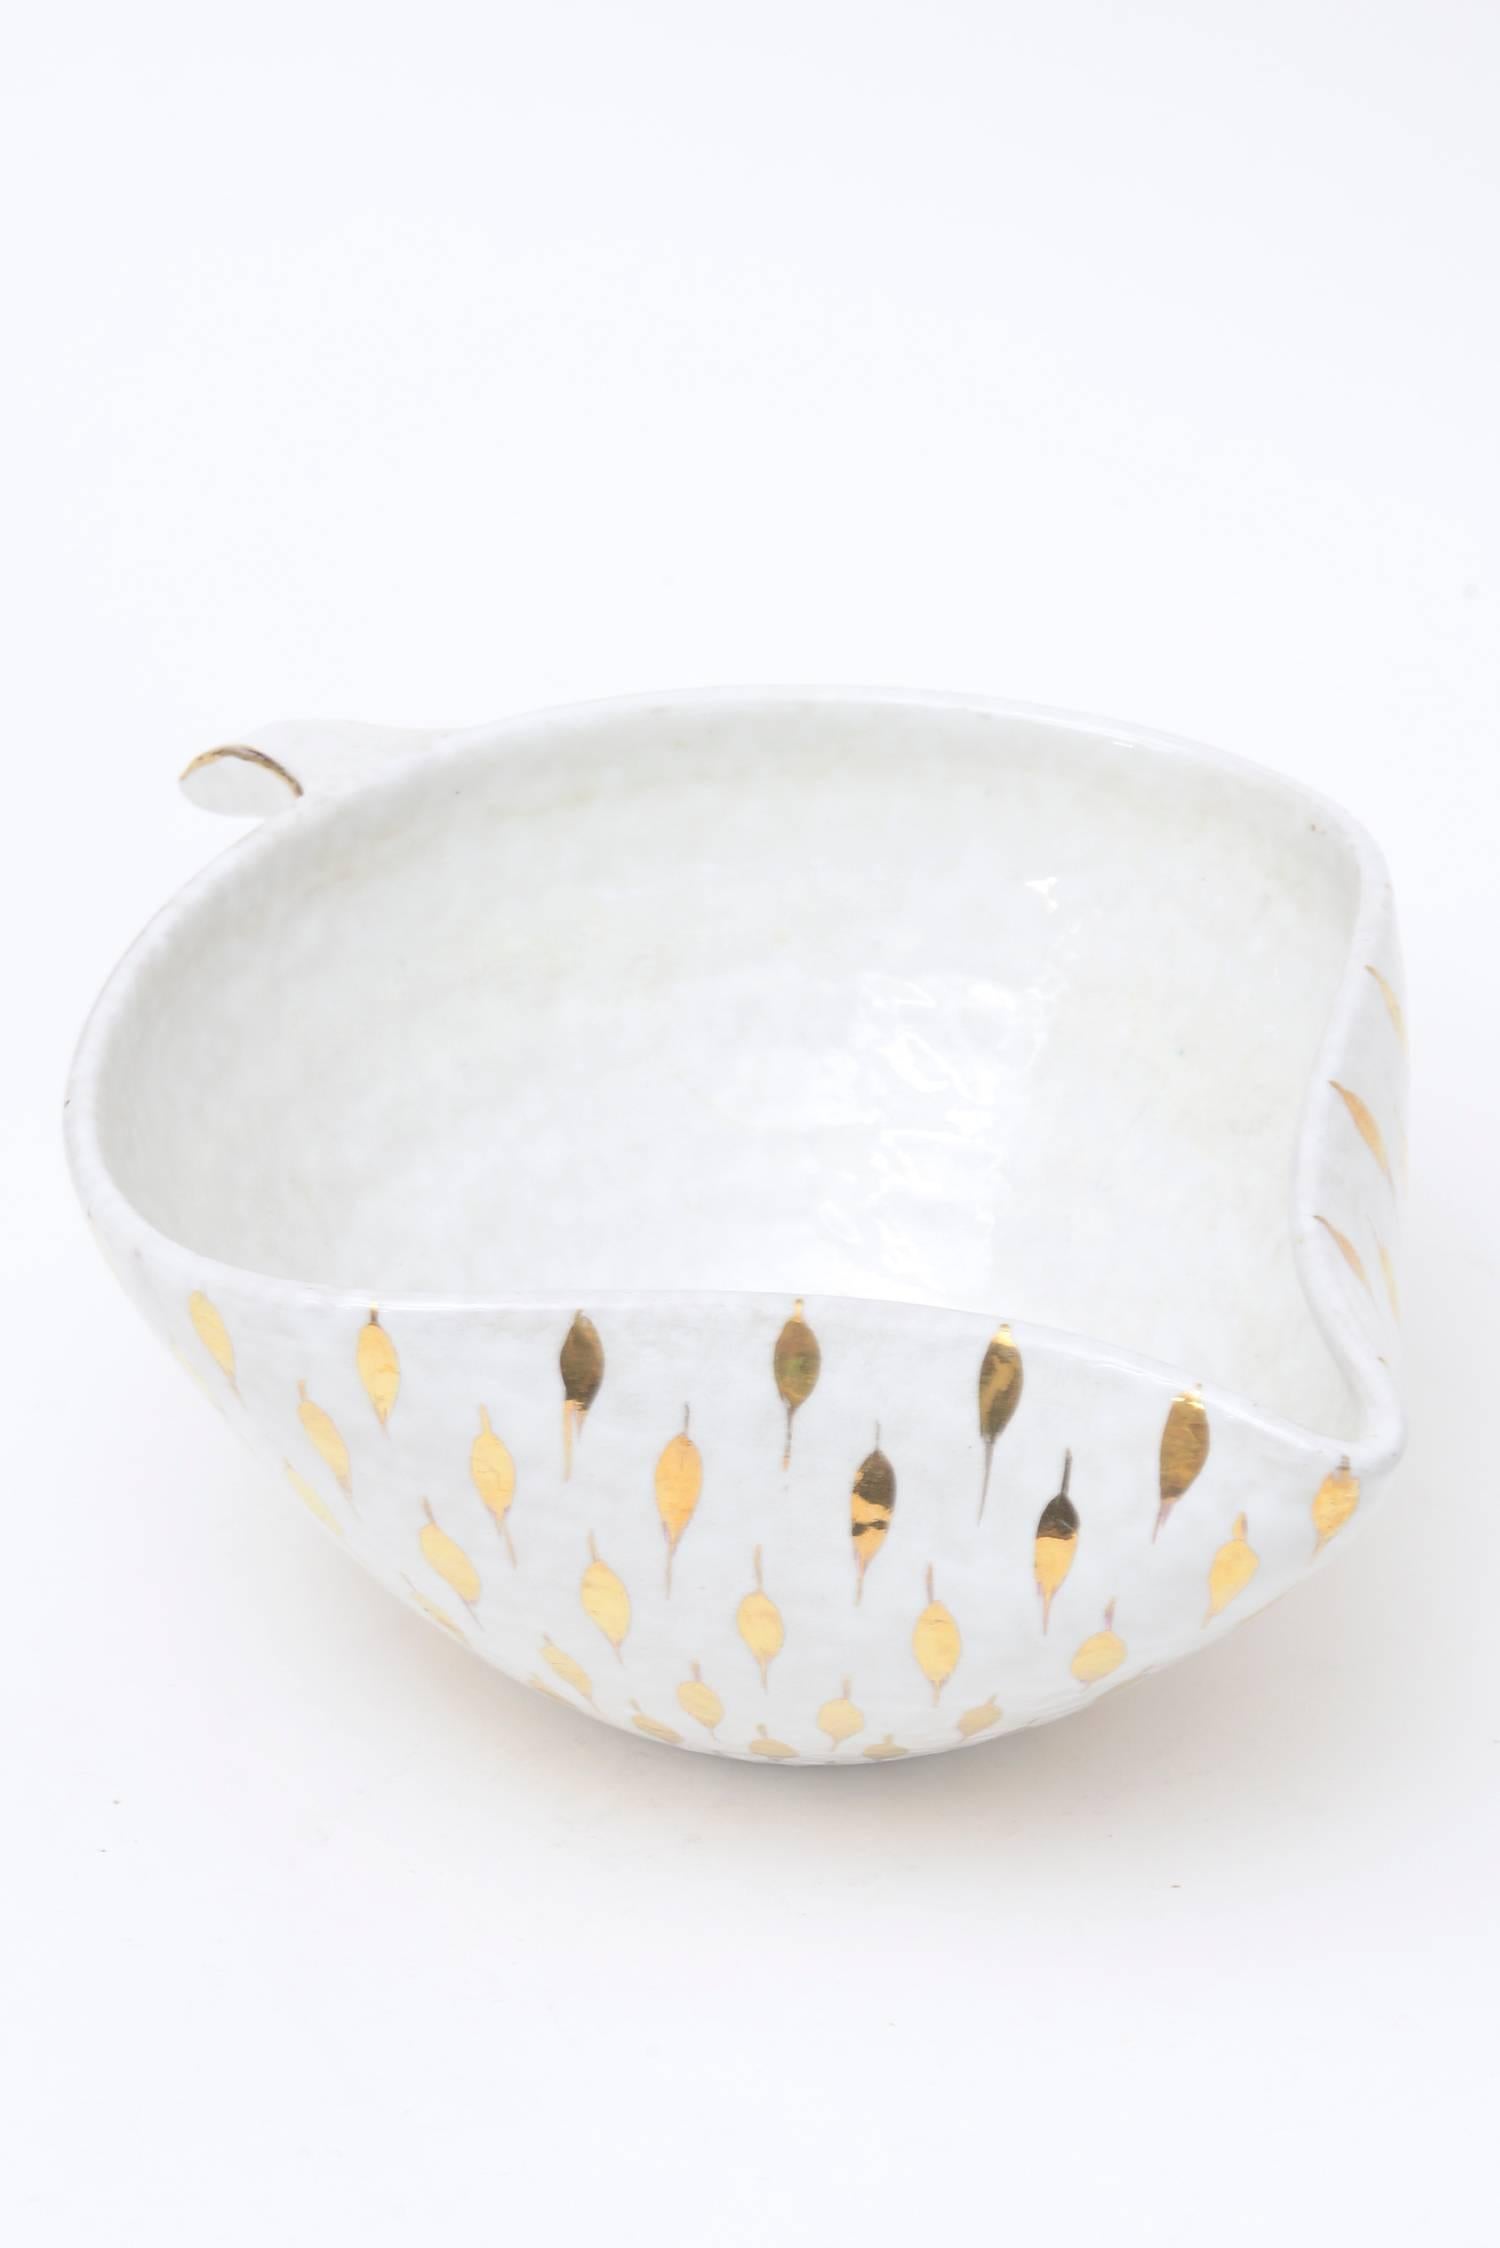 Aldo Londi For Bitossi Feather Plume Ceramic Bowl Vintage White And Gold In Good Condition For Sale In North Miami, FL